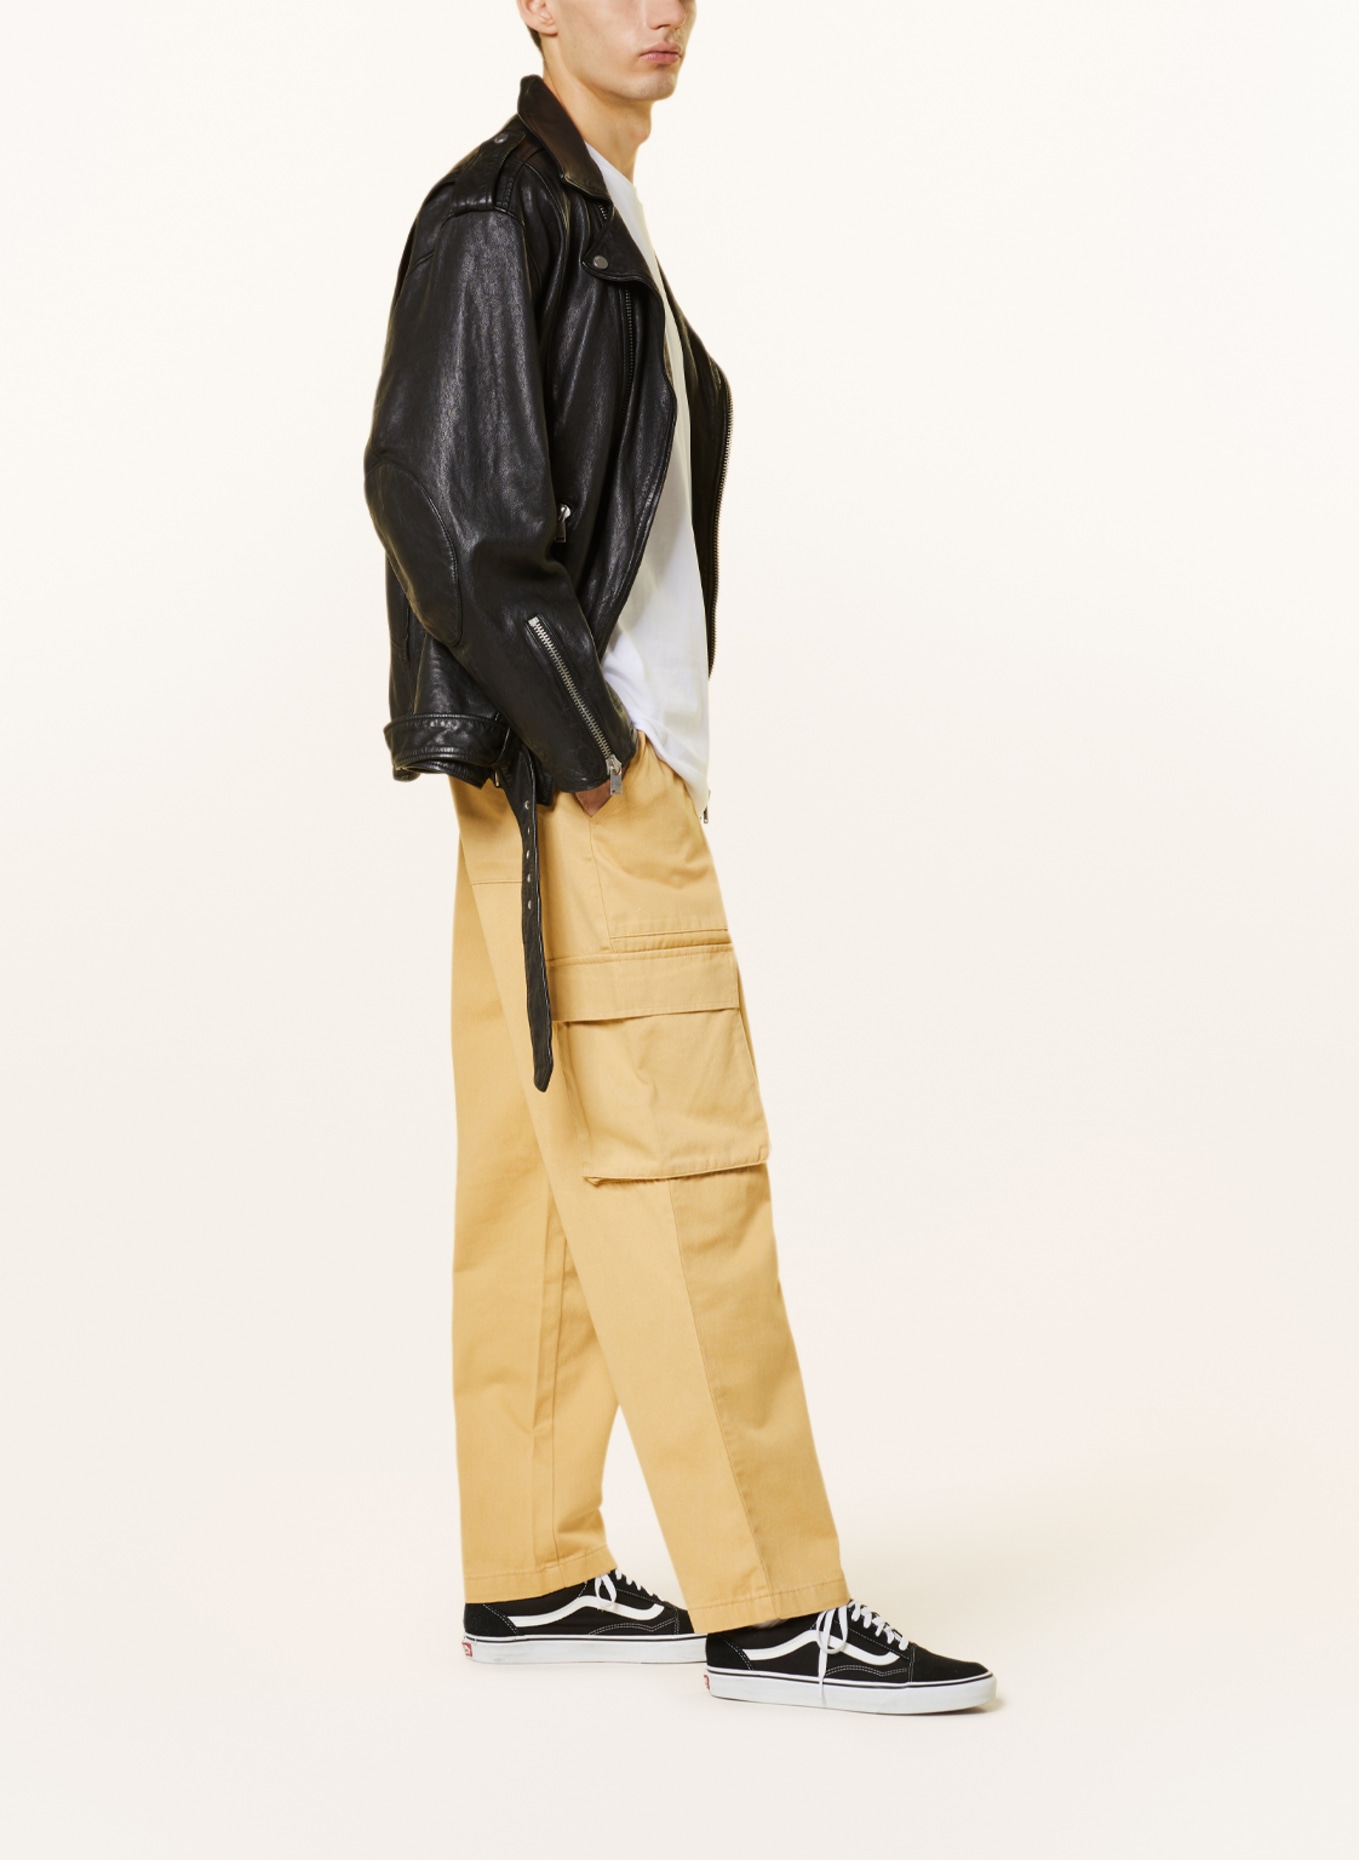 Men's Black and Yellow Cargo Jogger Streetwear Pants w/ Straps size  XXXL 3XL | eBay